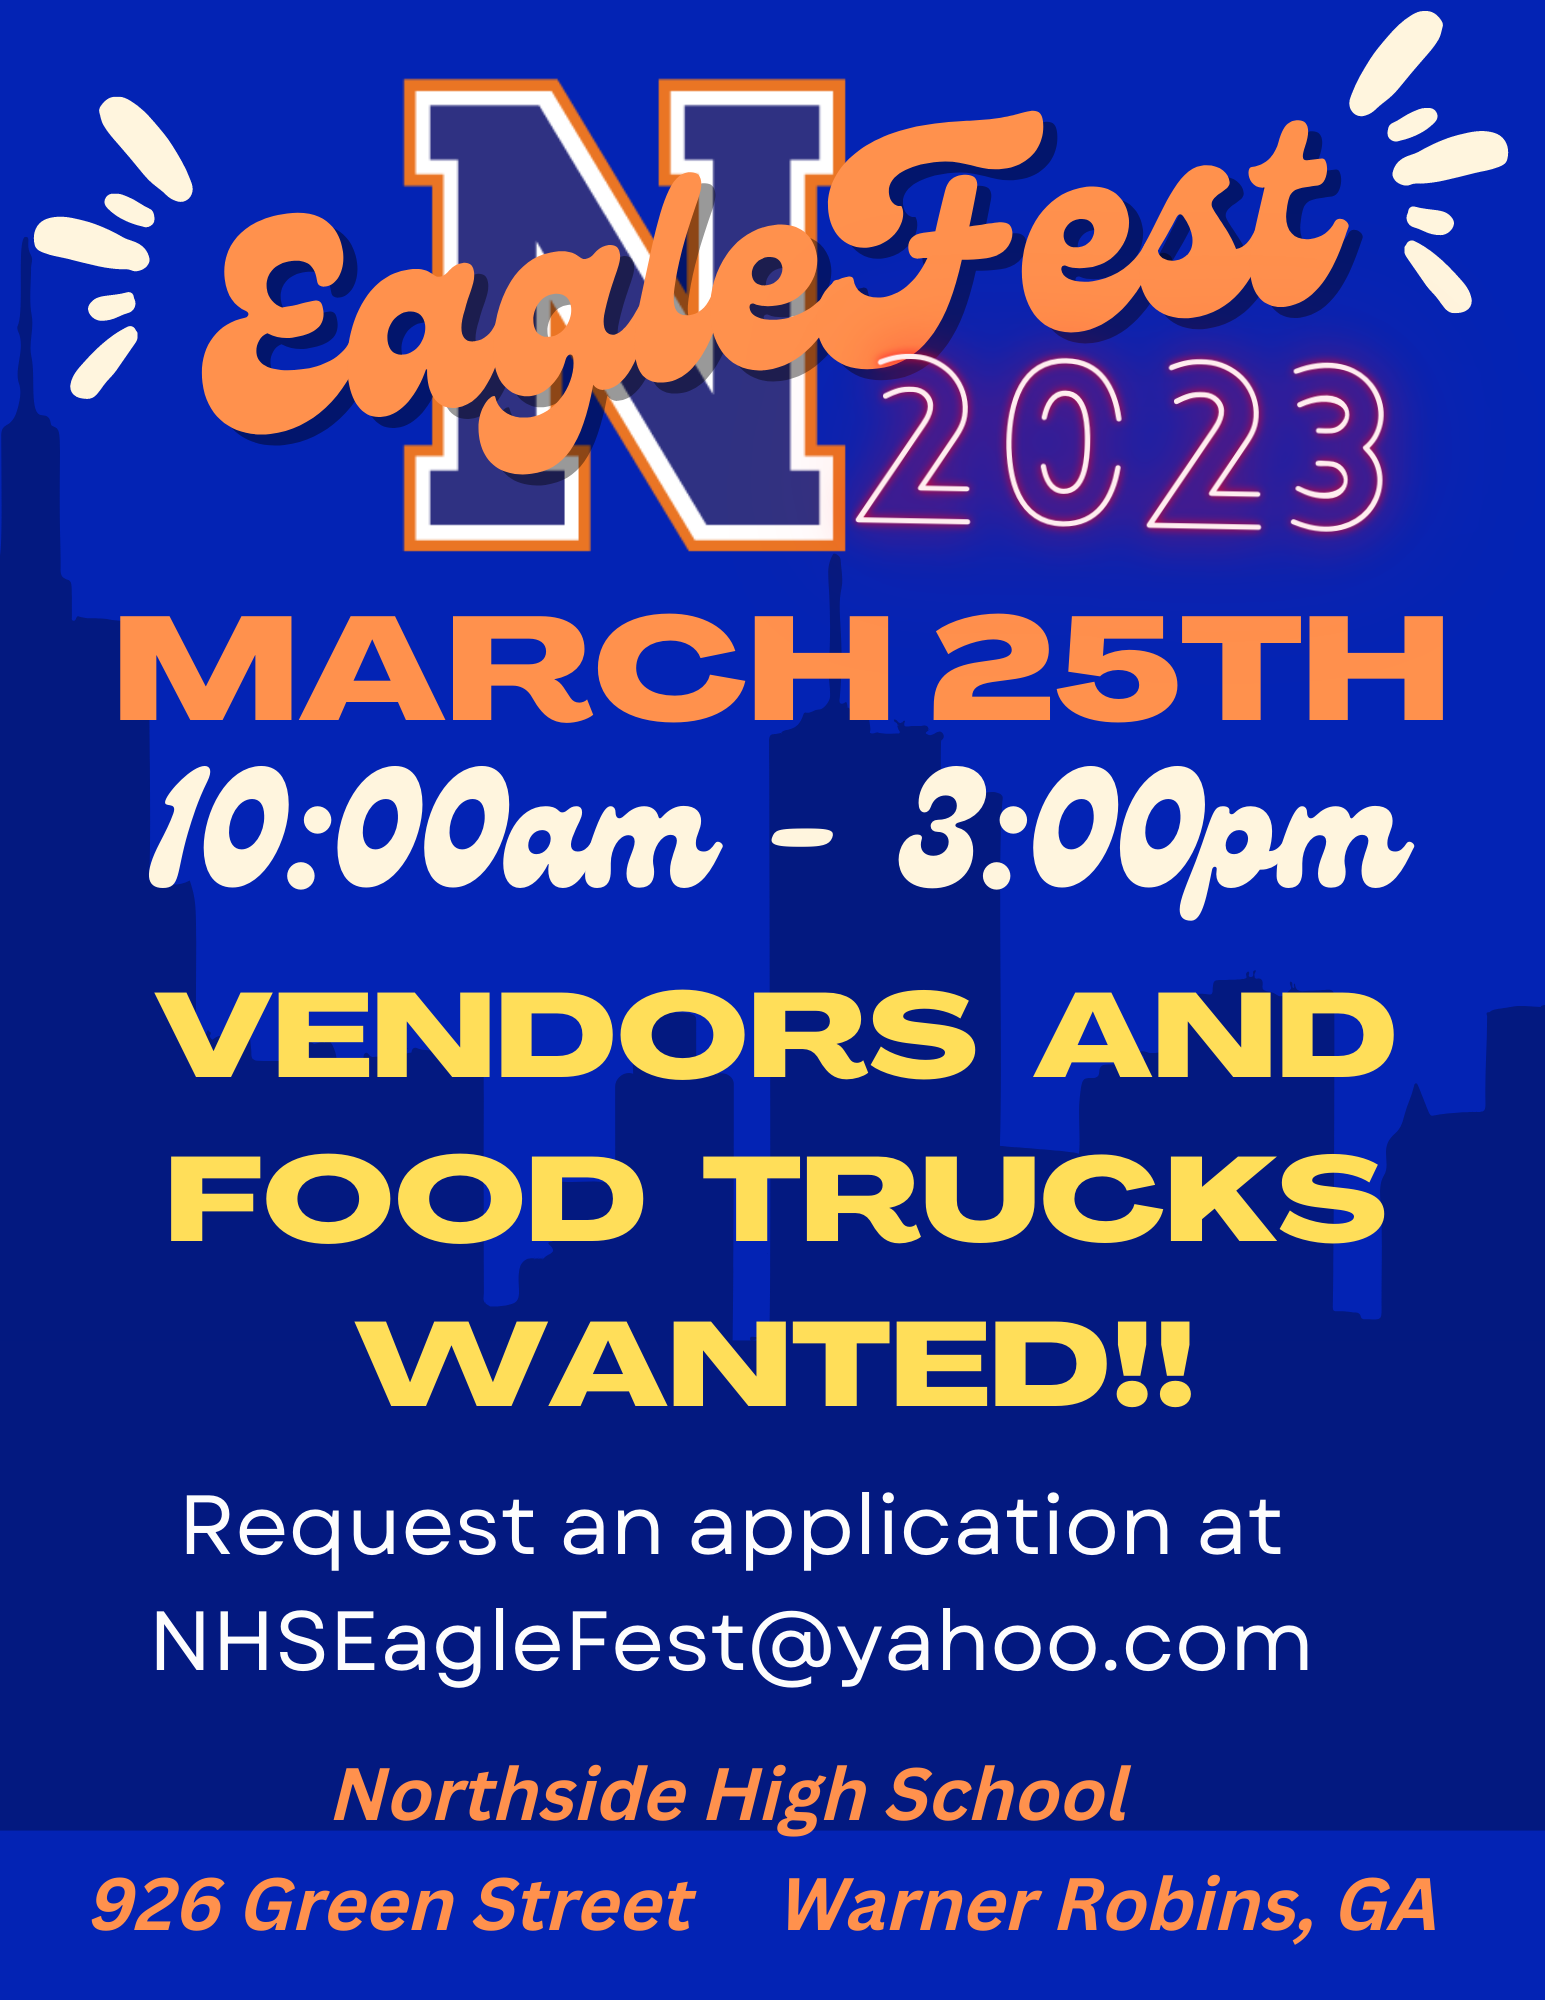 Eagle Fest Vendors wanted